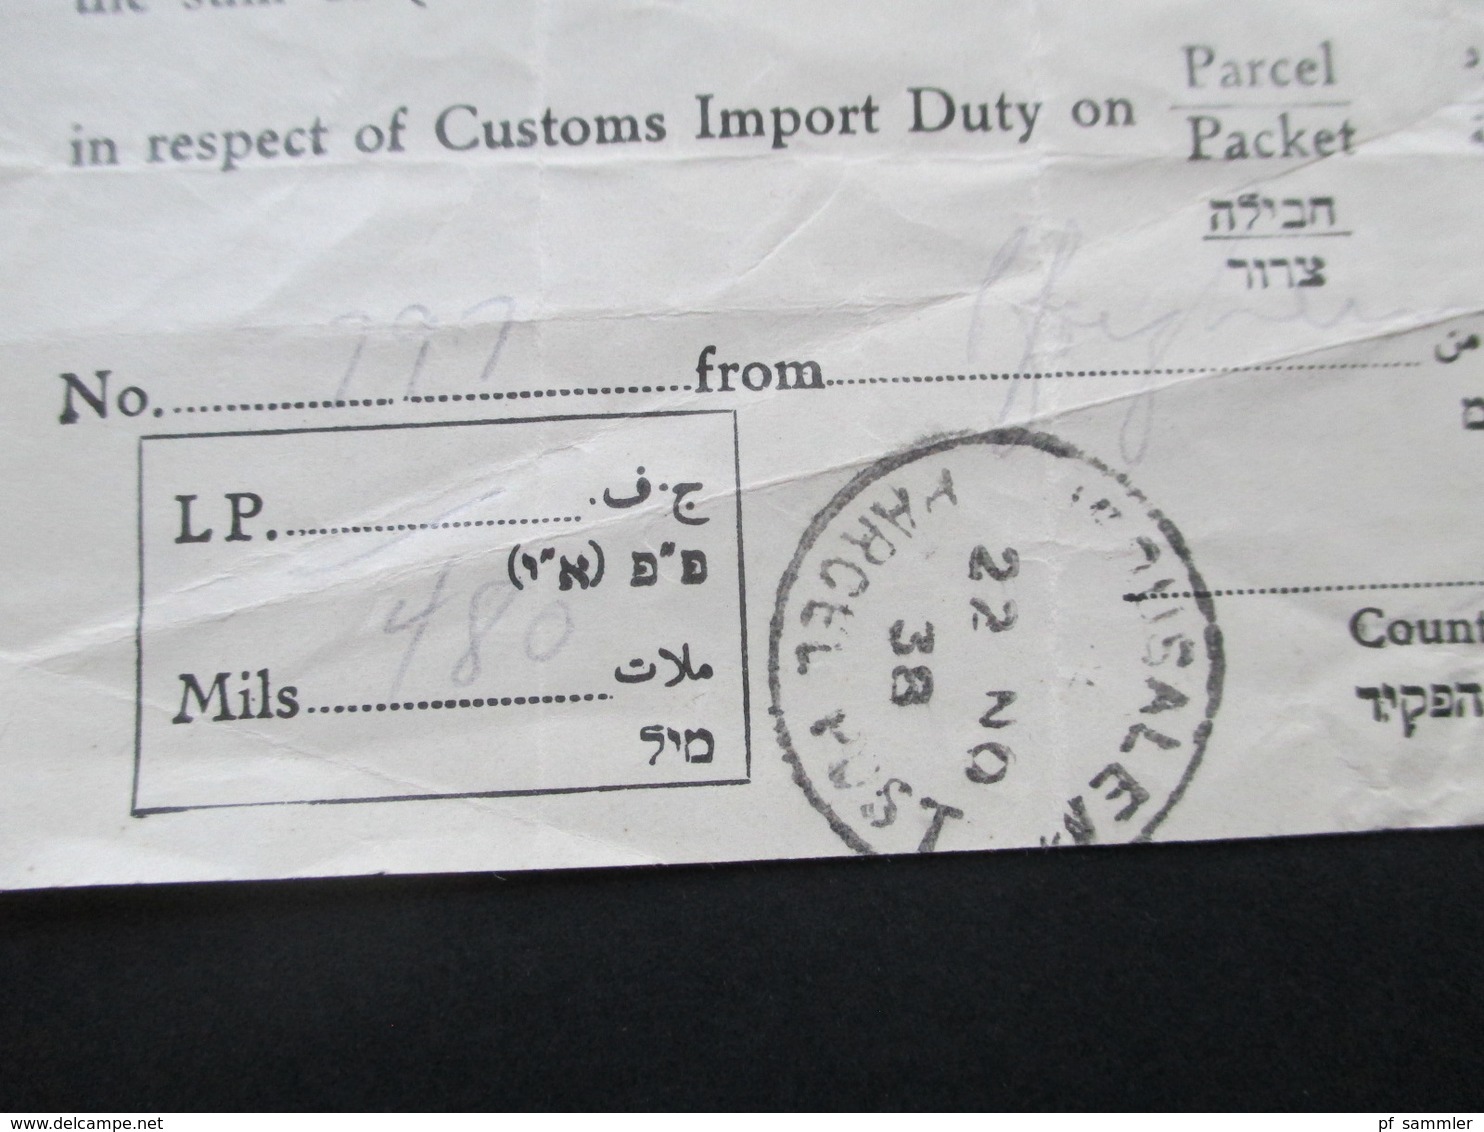 Palästina 1938 Jerusalem Parcel Post Receipt For Customs Import Duty. Judaika. Fiskalmarken?! Palestine Post - Palestine